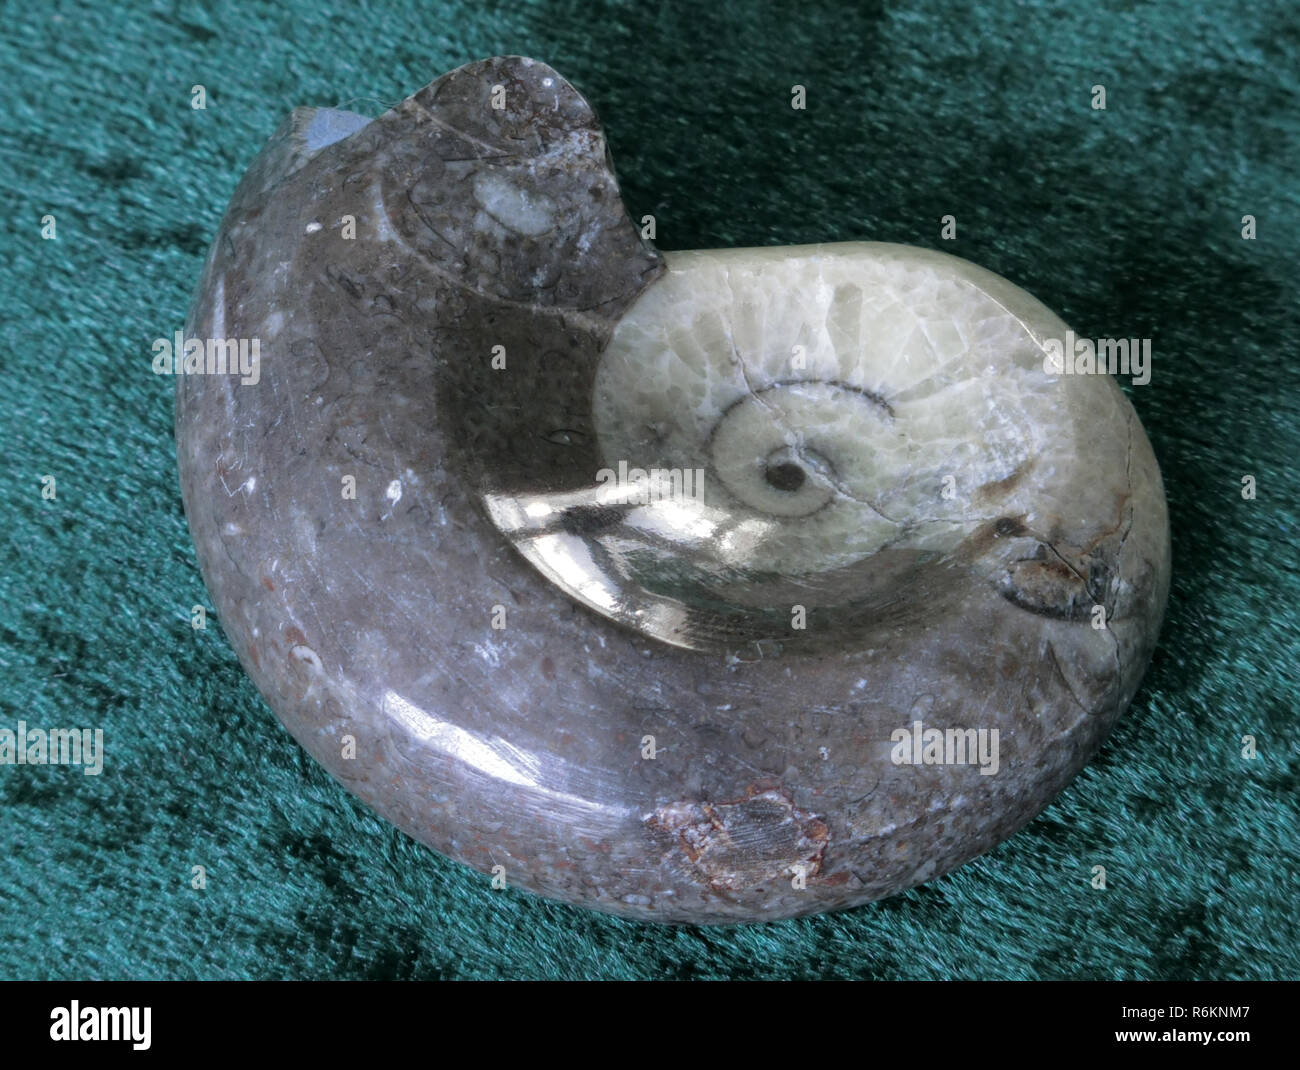 Ammonite Fossil a Type of Extinct Cephalopod Marine Molluscs Stock Photo